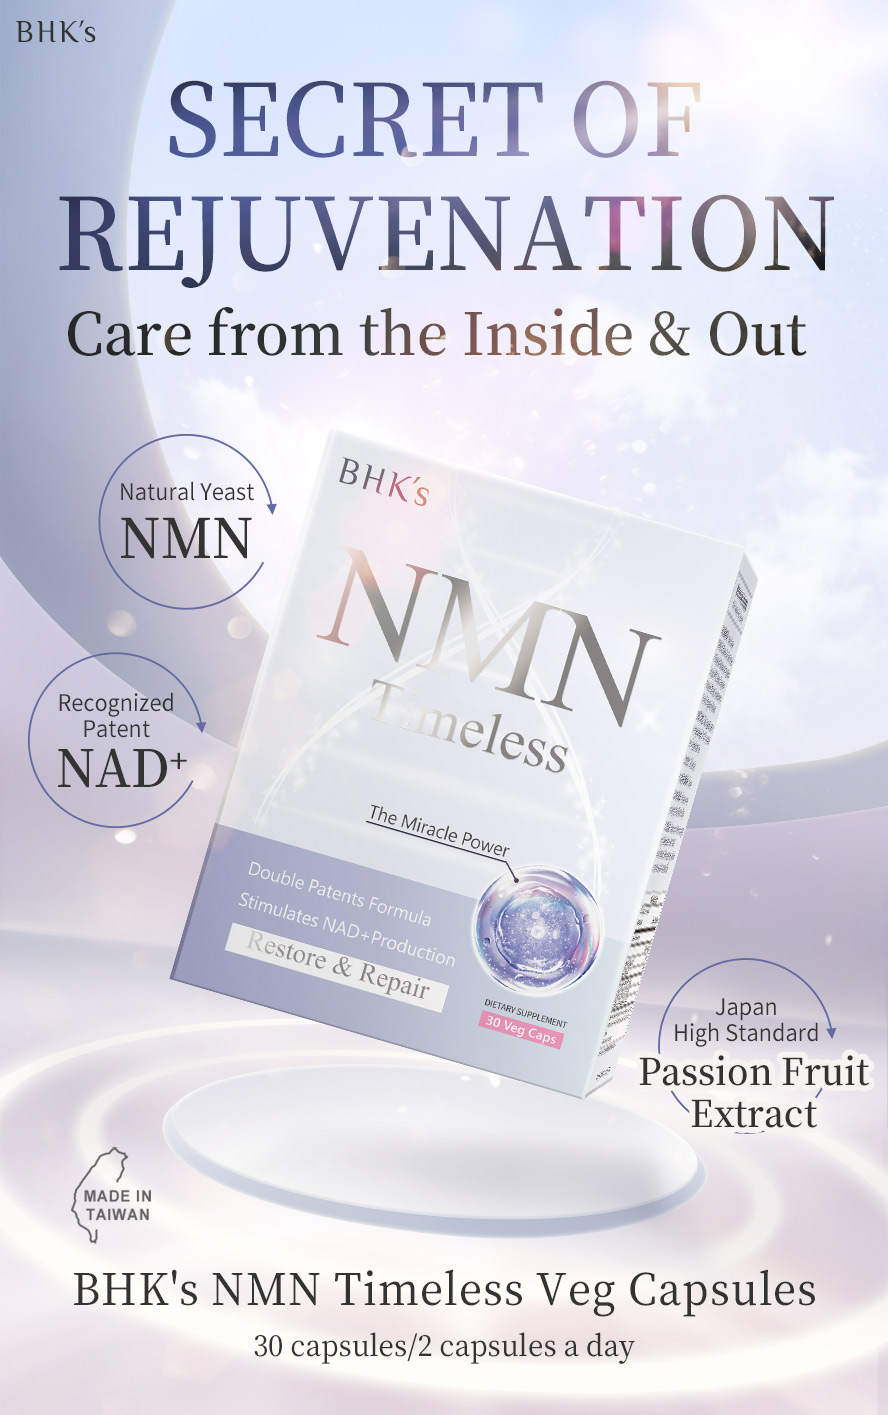 BHK's NMN Timeless for effective skin anti-aging & rejuvenate skin elasticity